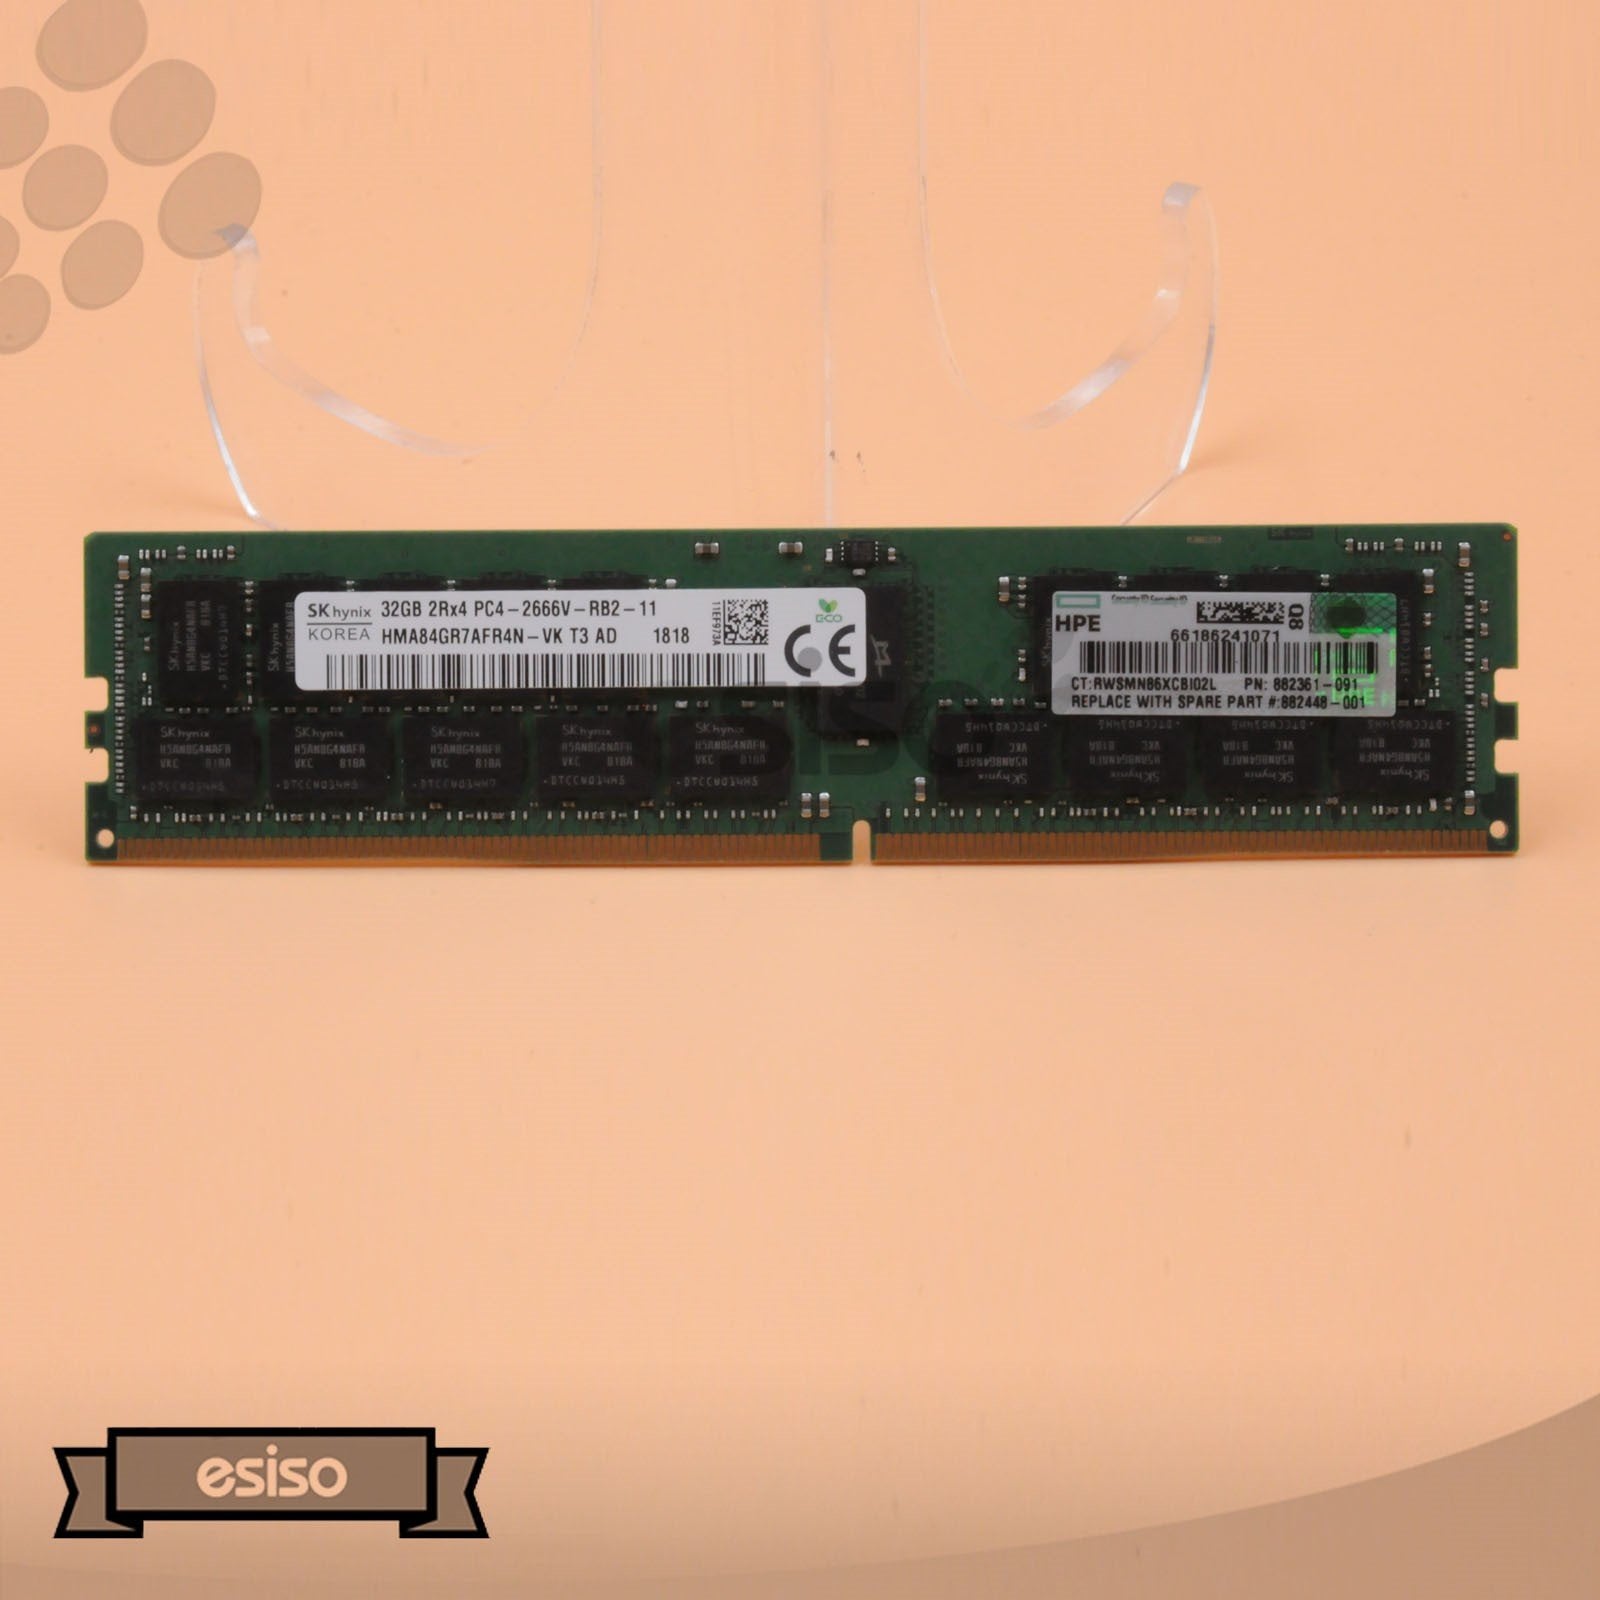 882361-091 882448-001 880841-B21 HPE 32GB 2RX4 PC4-2666V DDR4 MEMORY MODULE (1x32GB)